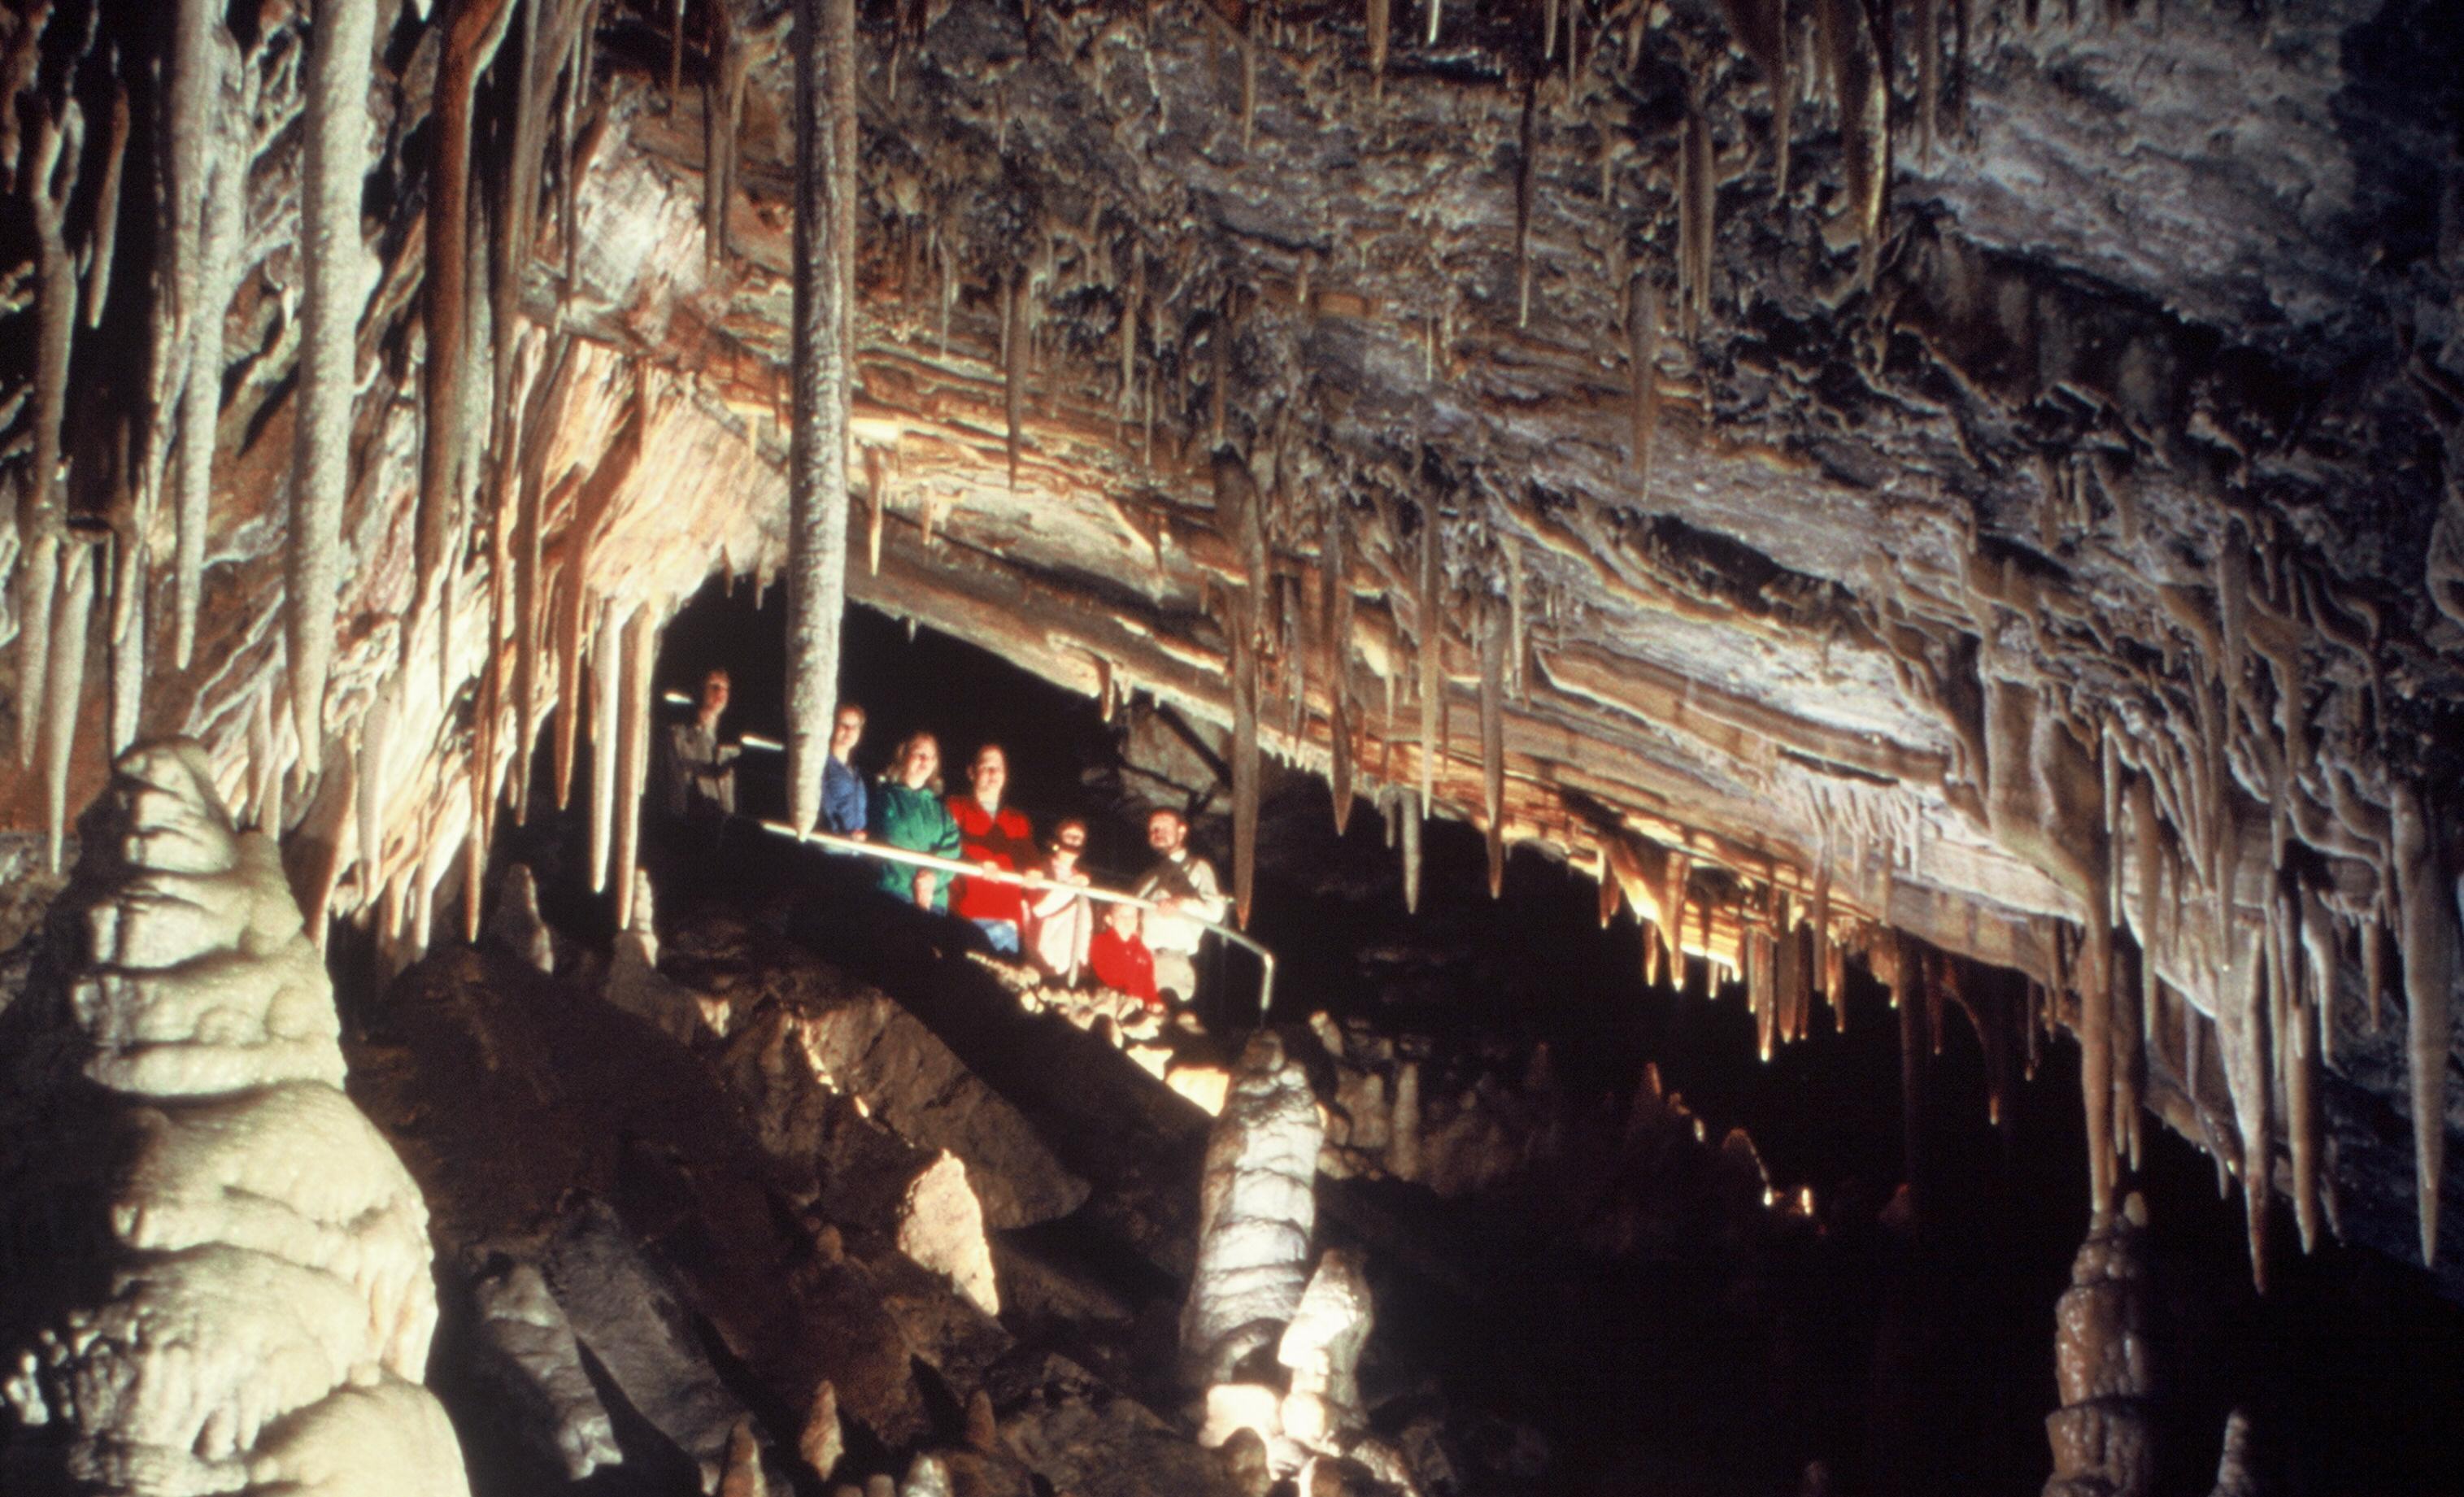 Glenwood Caves